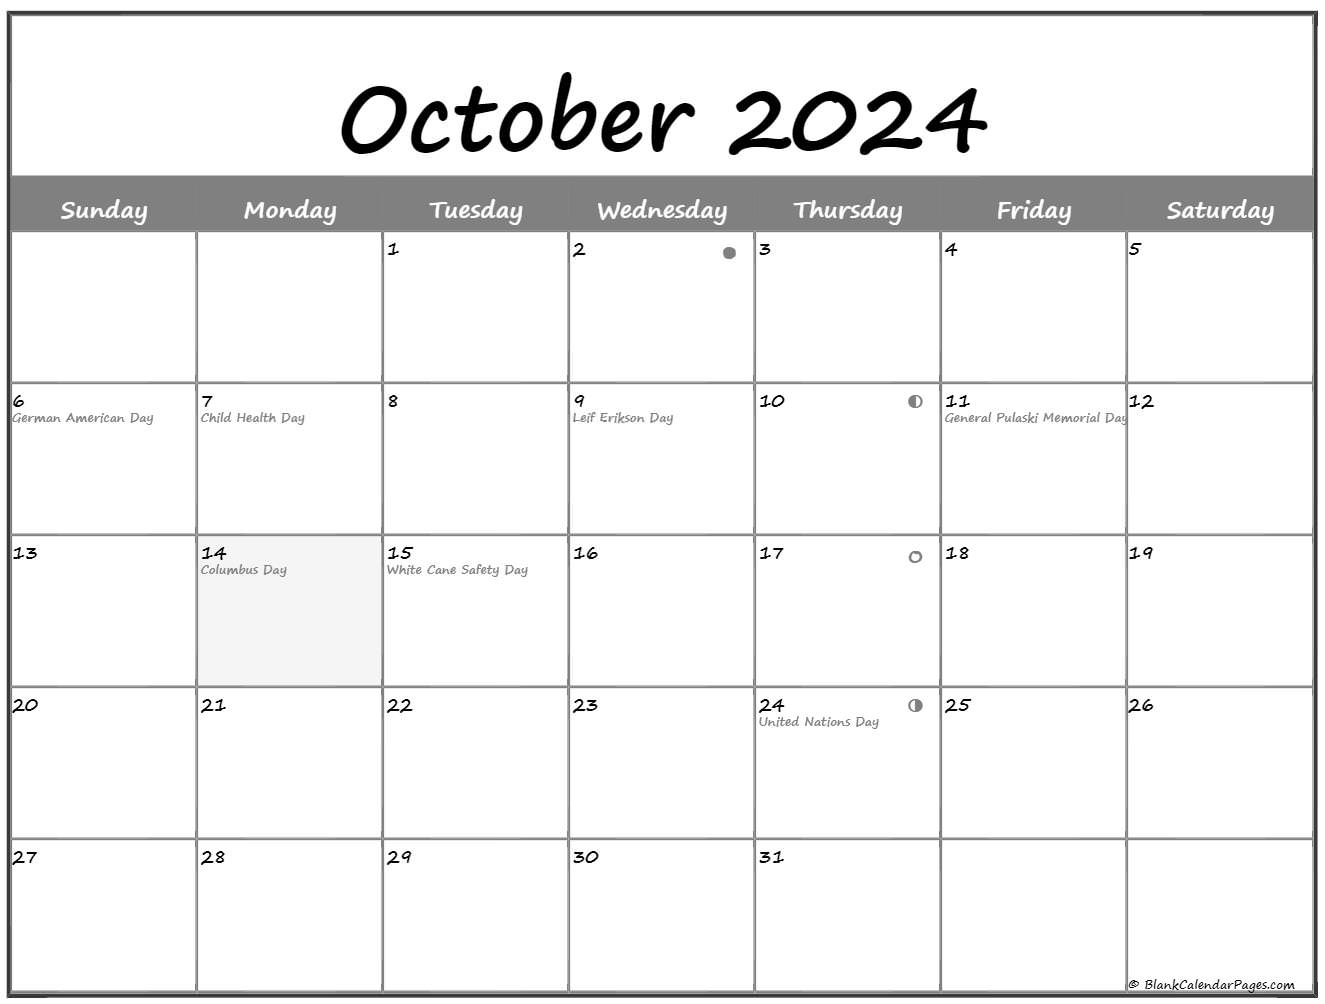 Moon Phase Calendar October 2022 October 2022 Lunar Calendar | Moon Phase Calendar